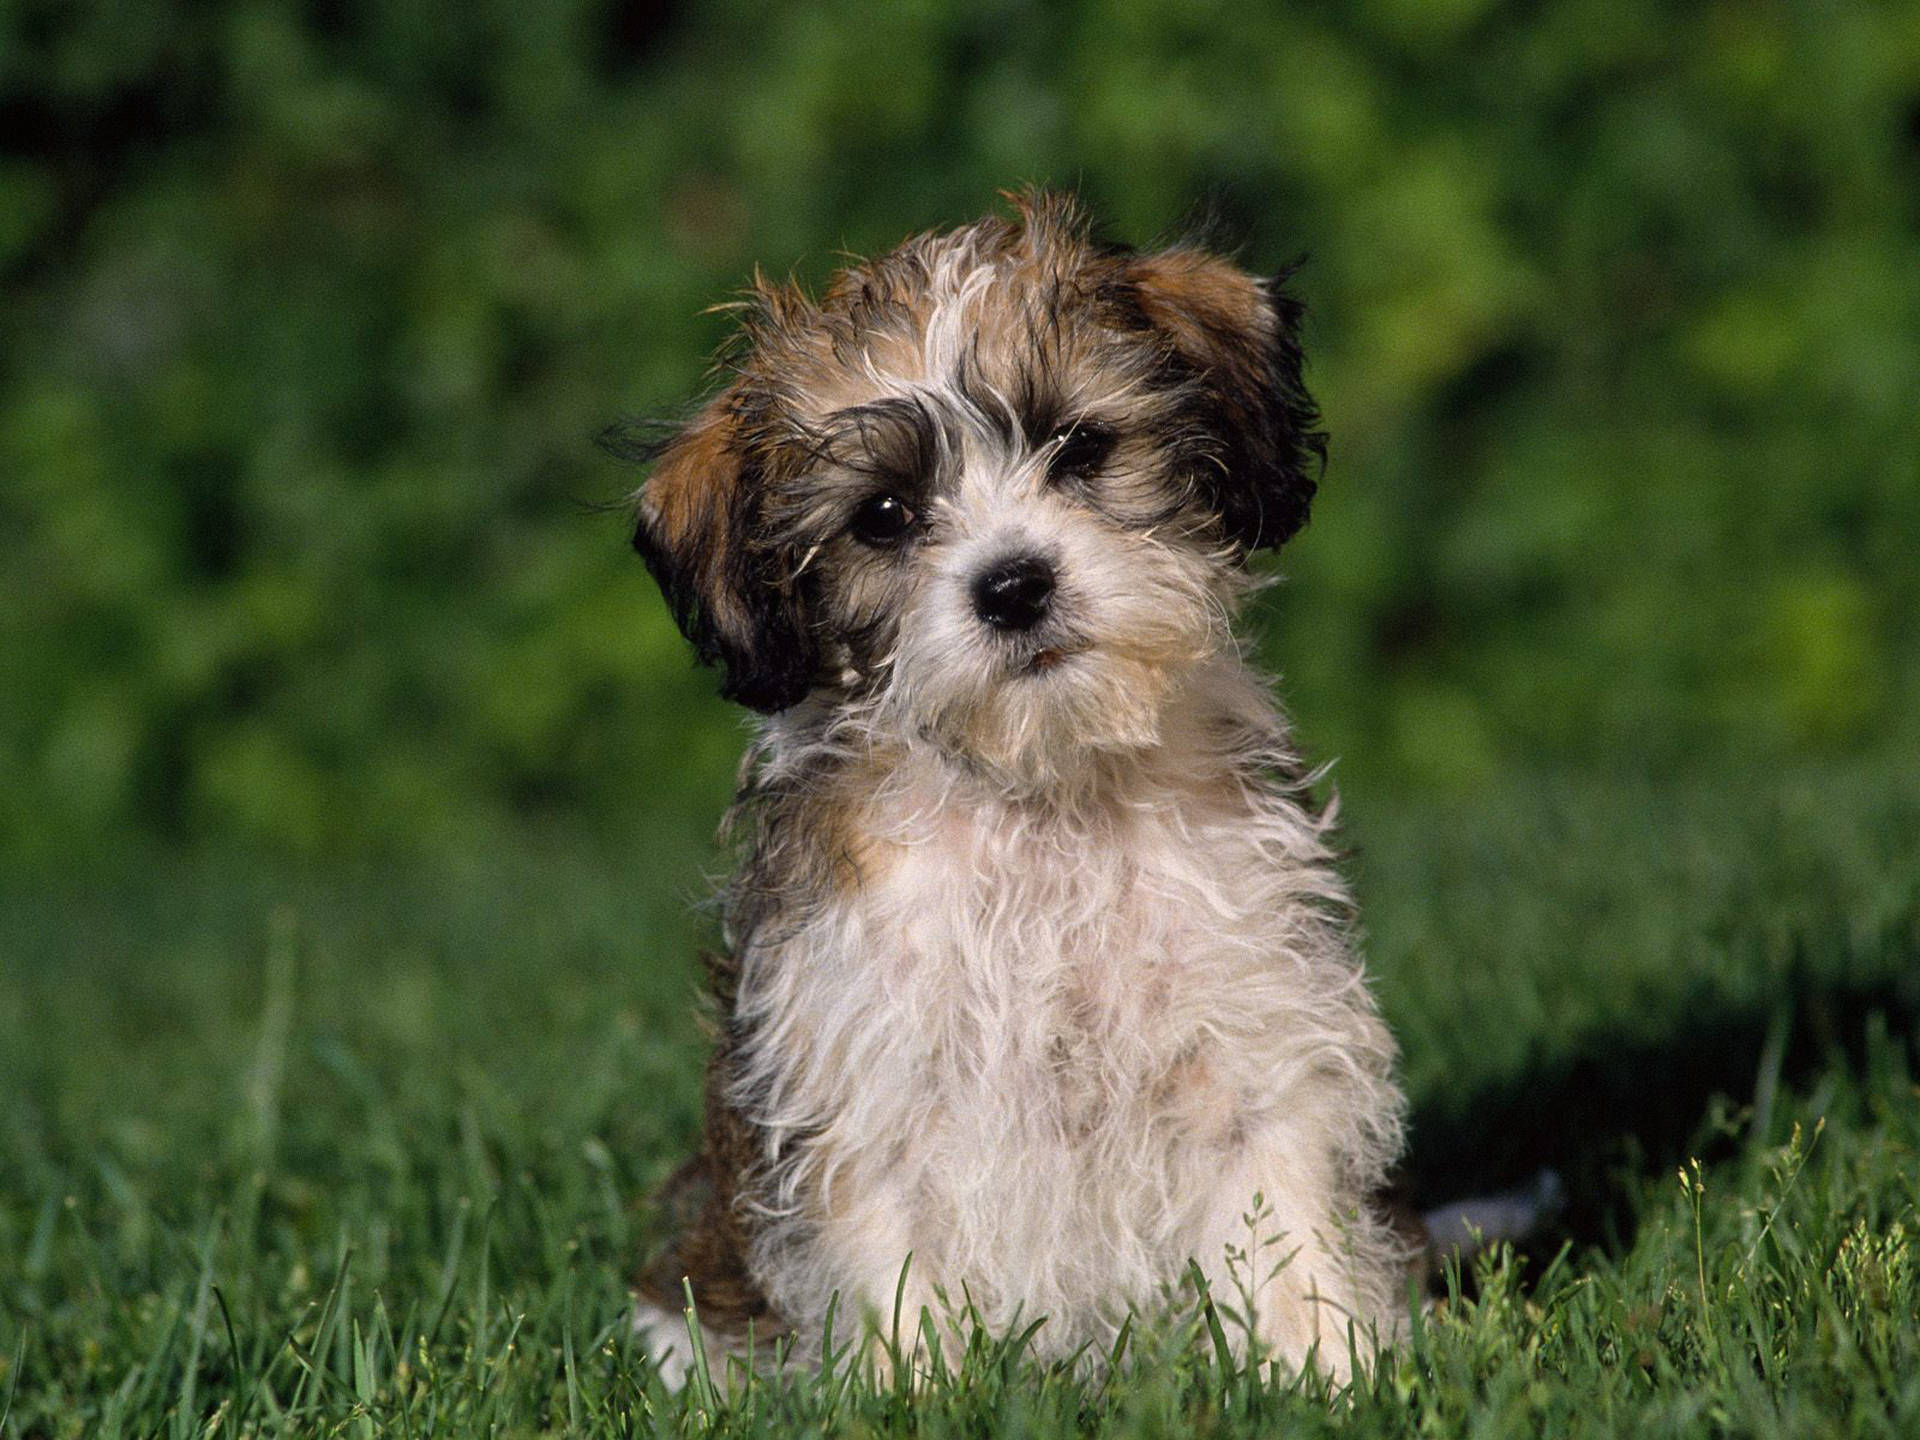 Sad Cute Puppy On Grass Background